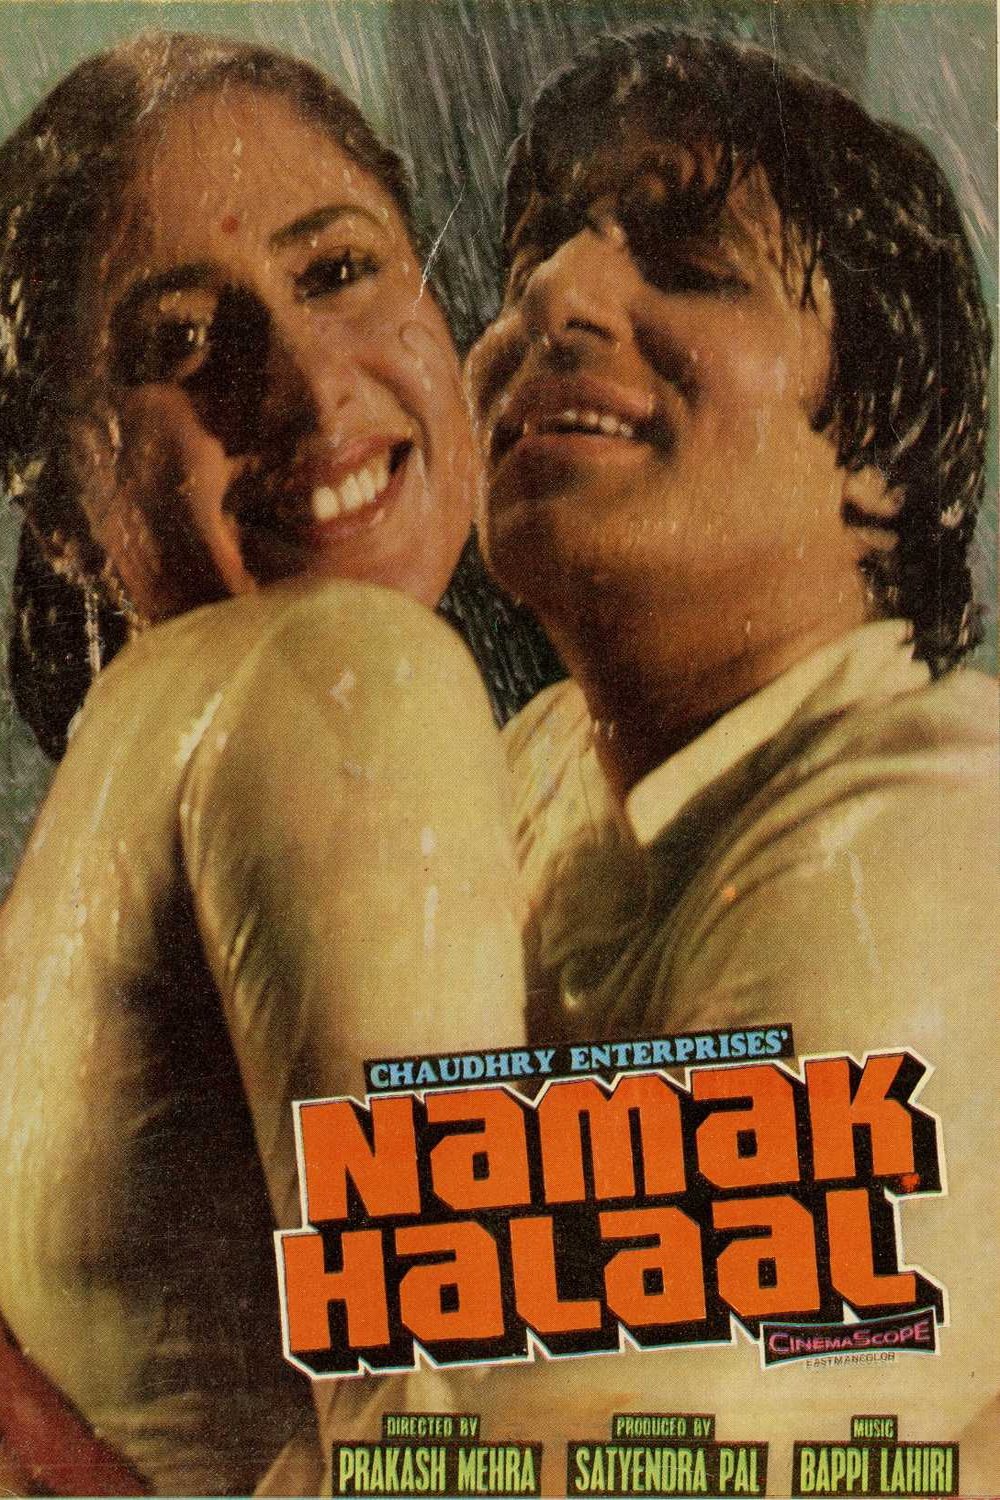 Hindi poster of the movie Namak Halaal